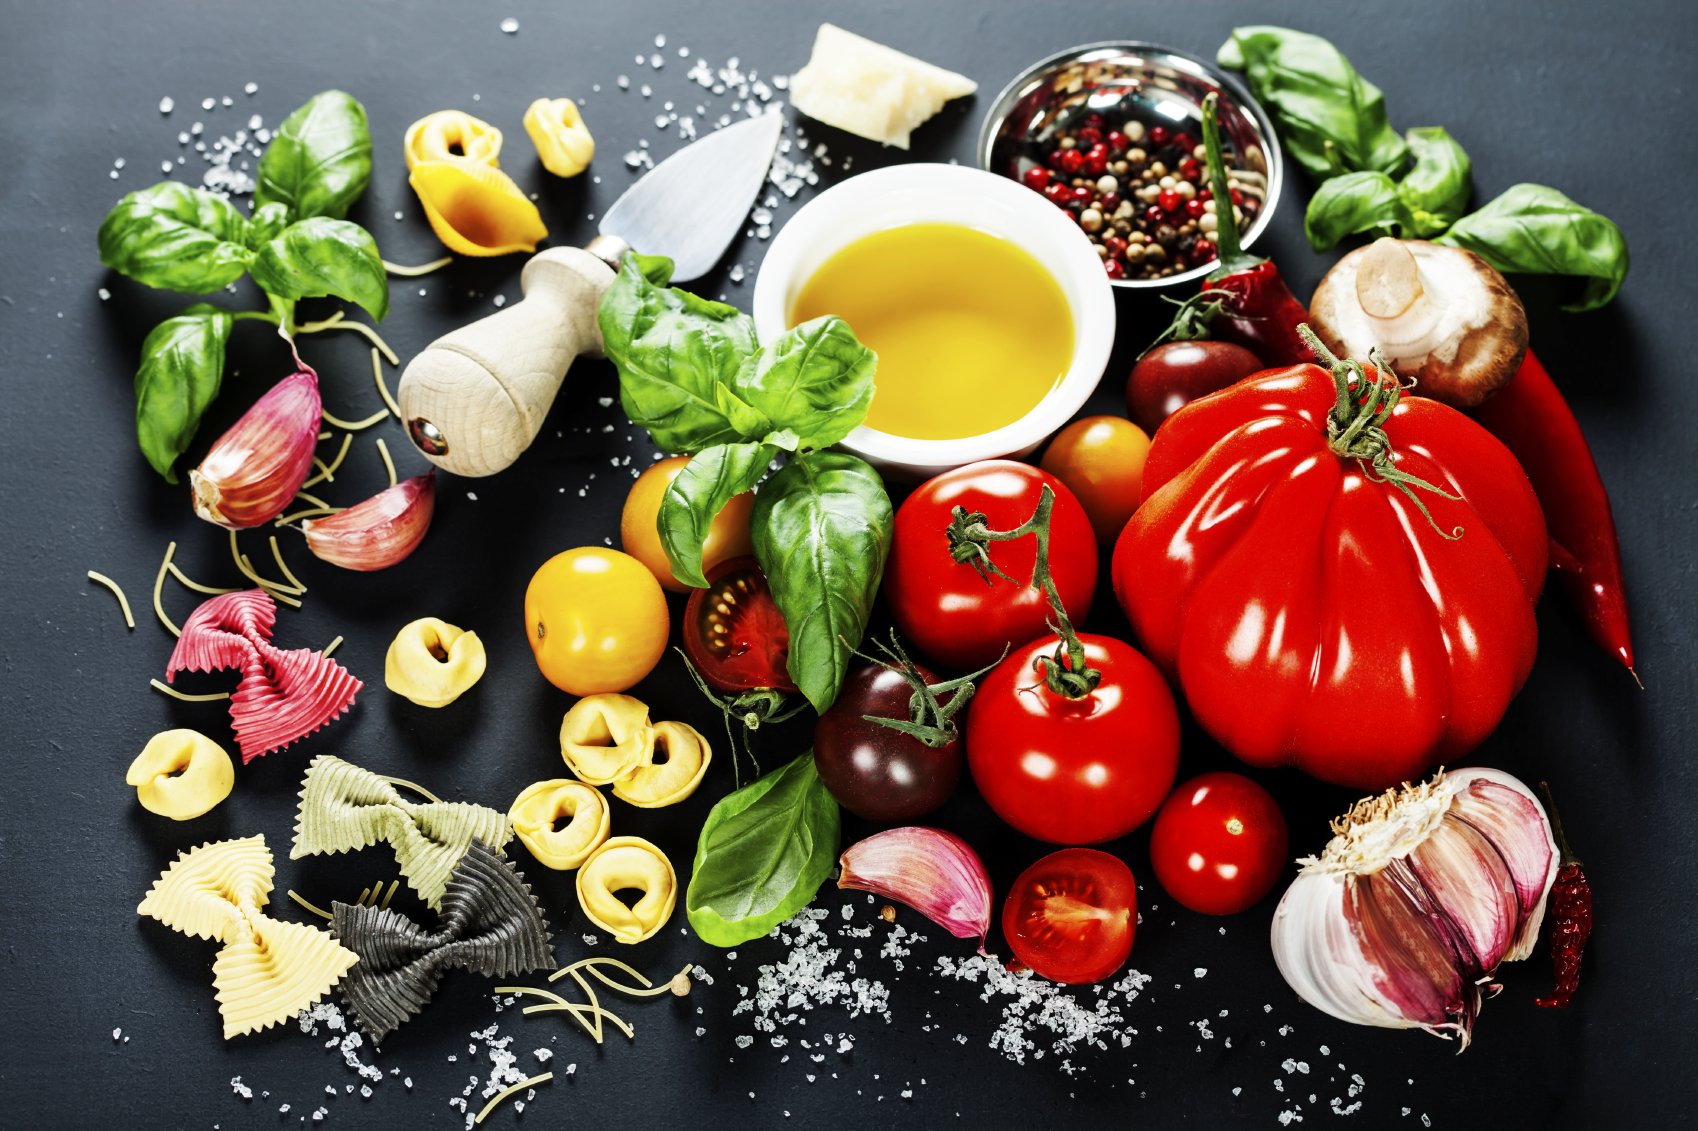 mediterranean diet ingredients: garlic, tomatoes, oil, pasta, basil, olives, herbs